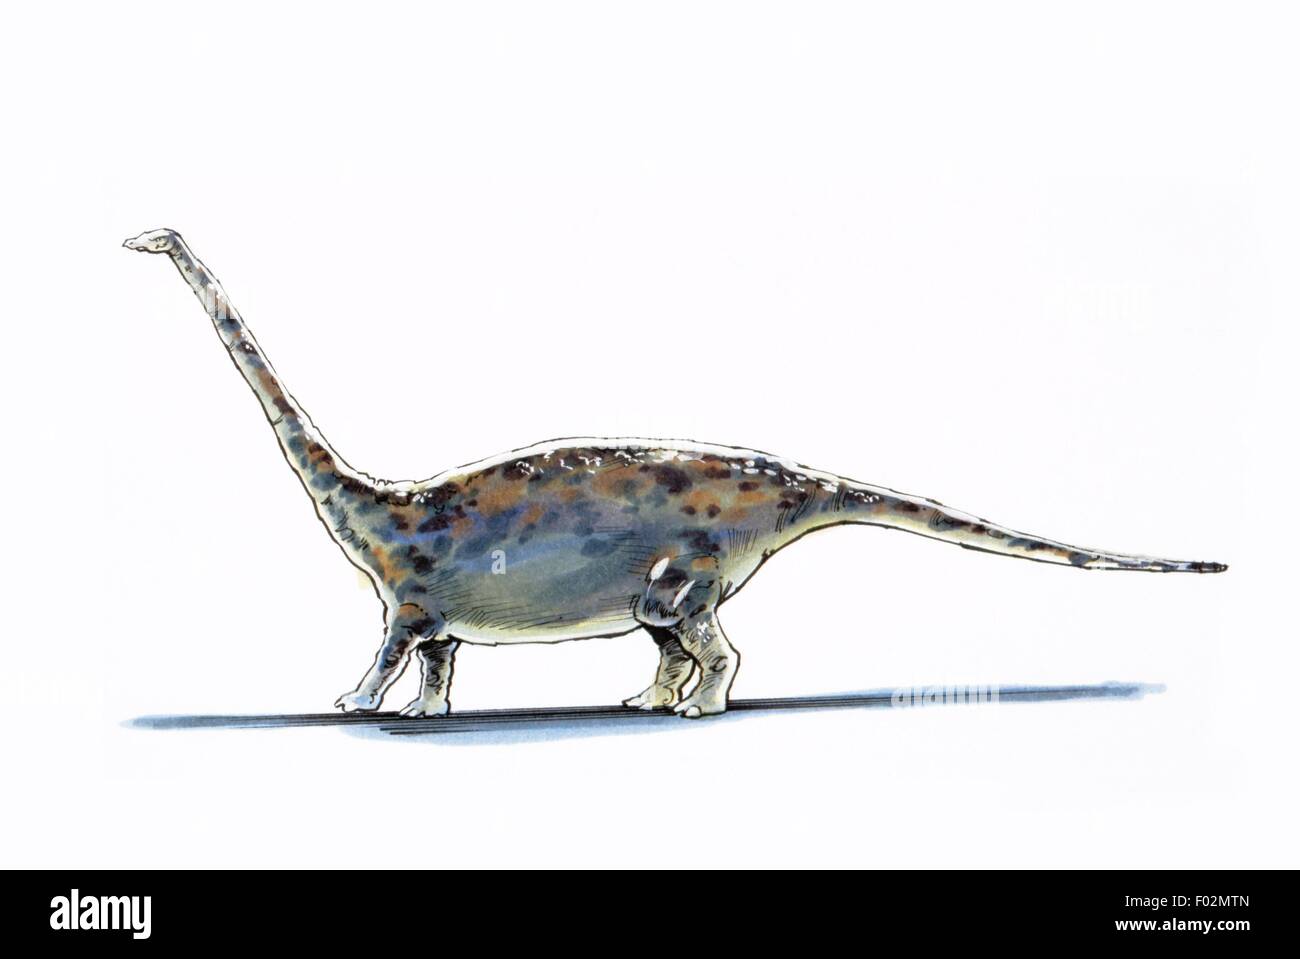 Palaeozoology - Jurassic period - Dinosaurs - Barapasaurus - Art work Stock Photo